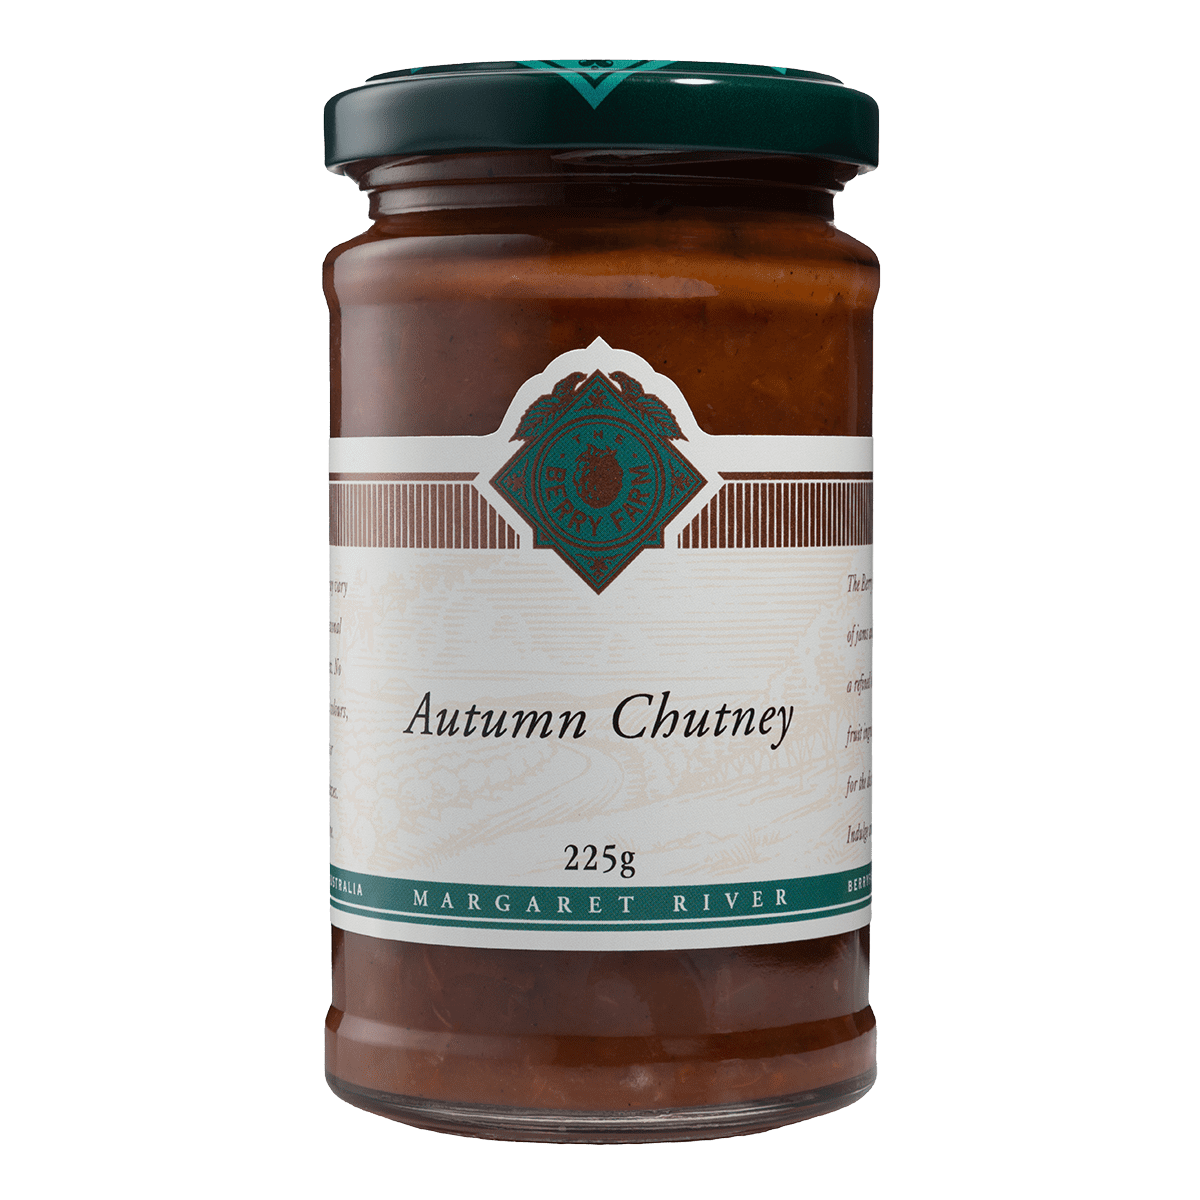 A jar of Autumn Chutney